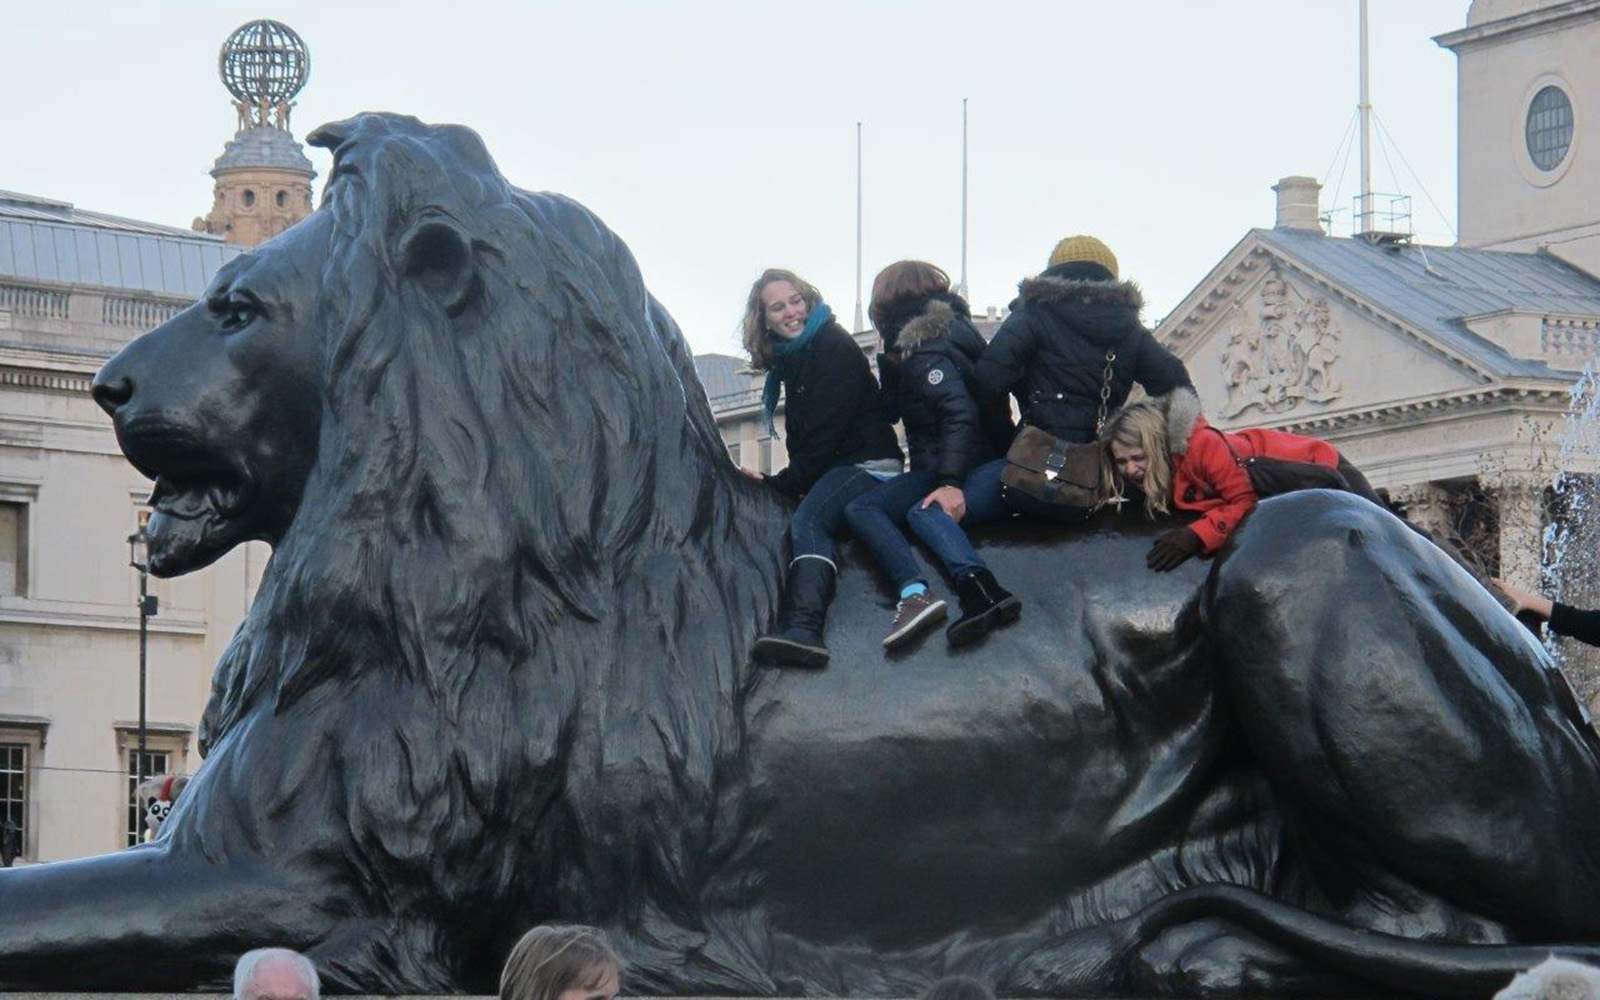 Riding Lion At Trafalgar Square